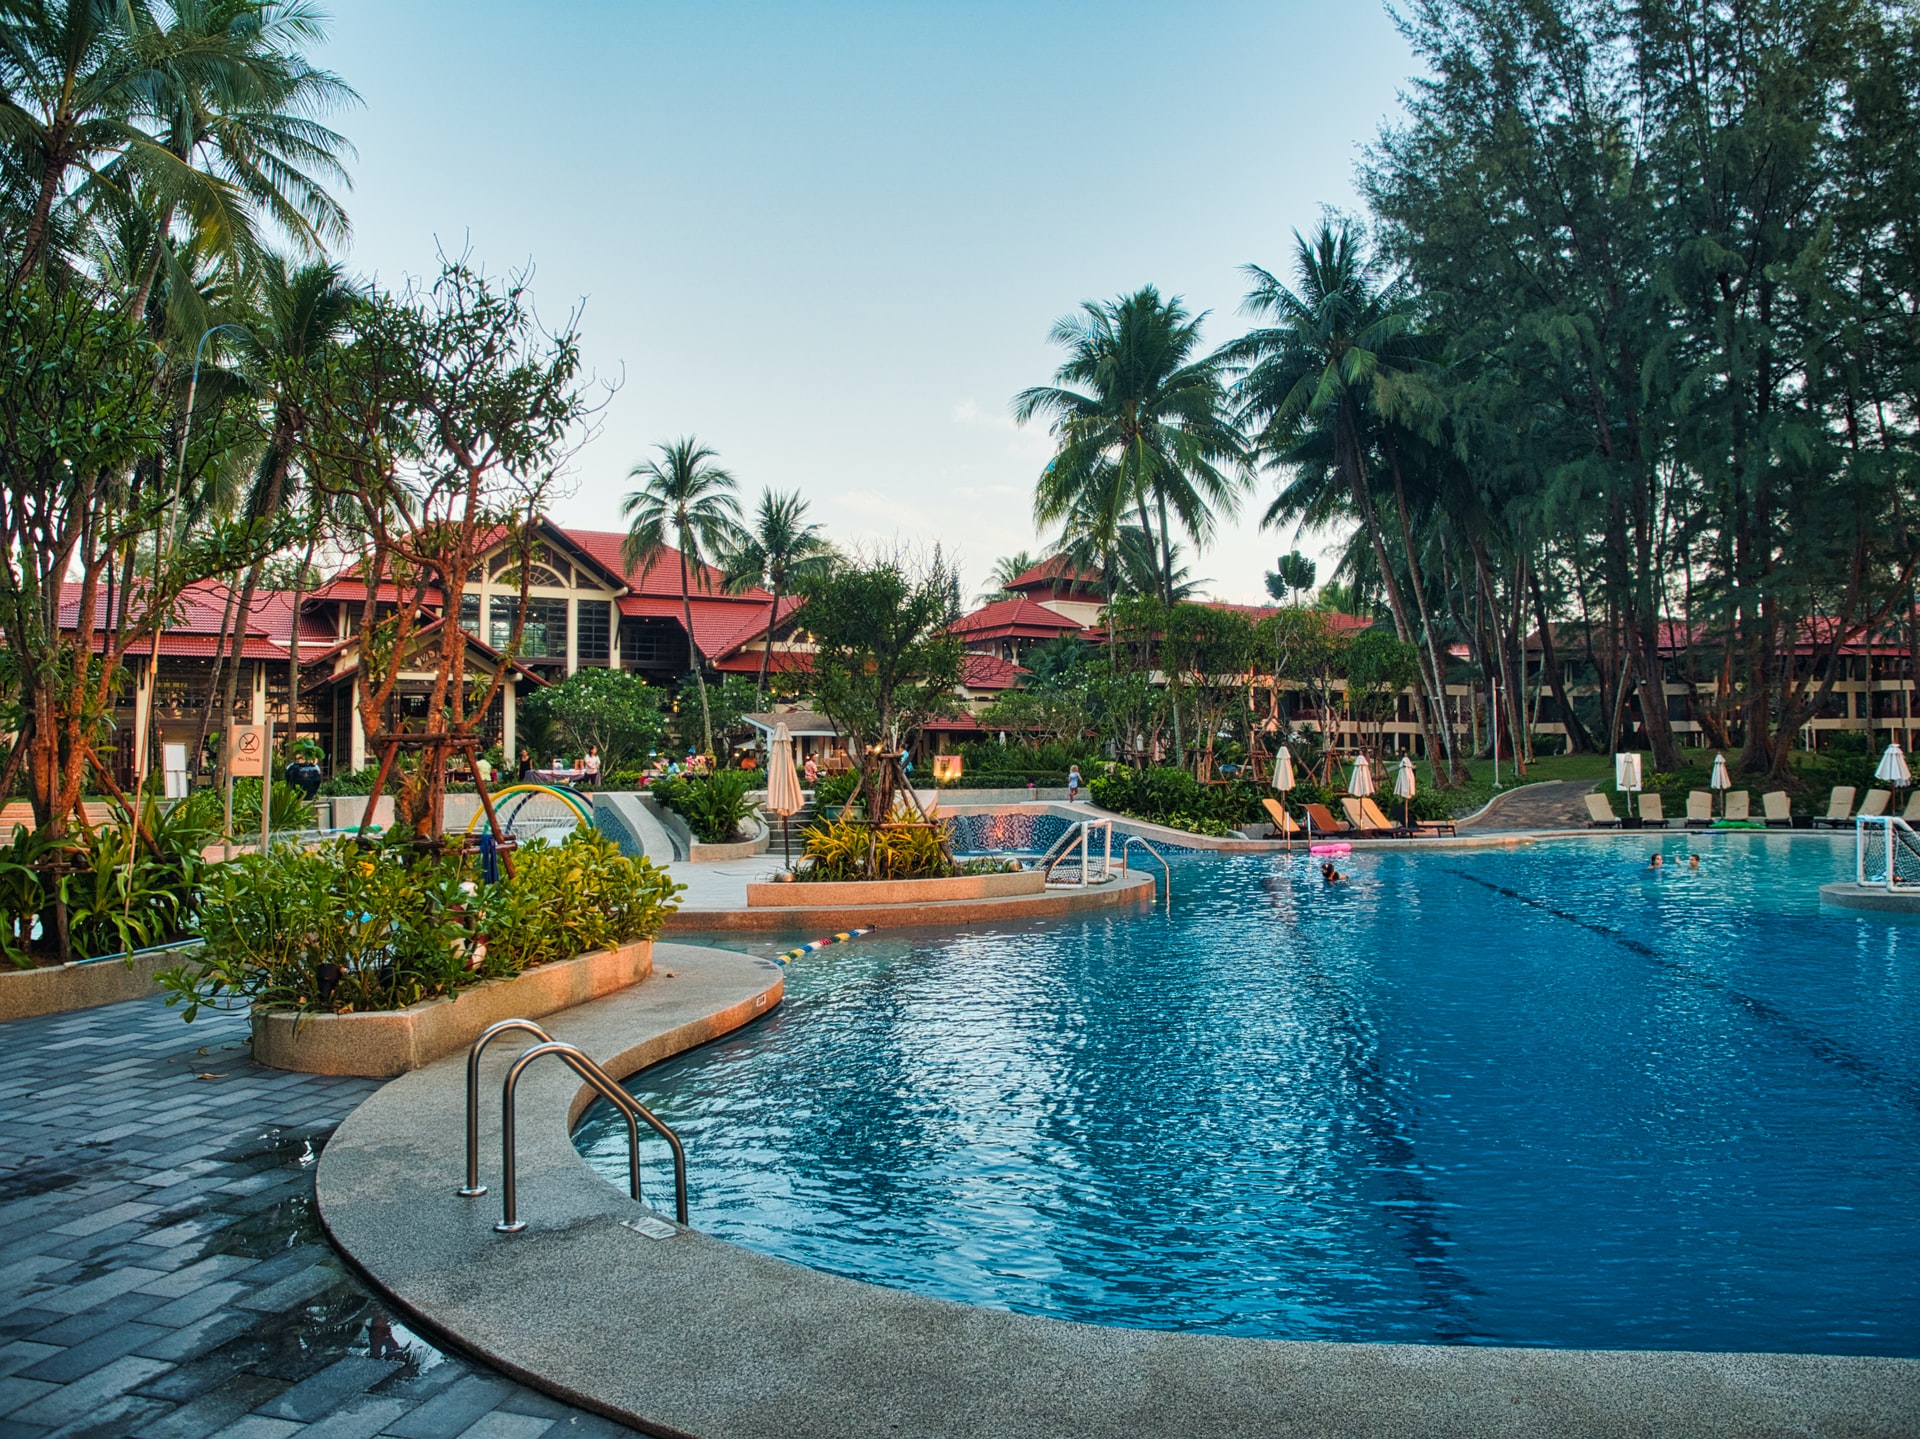 Resort view of pool at sunset